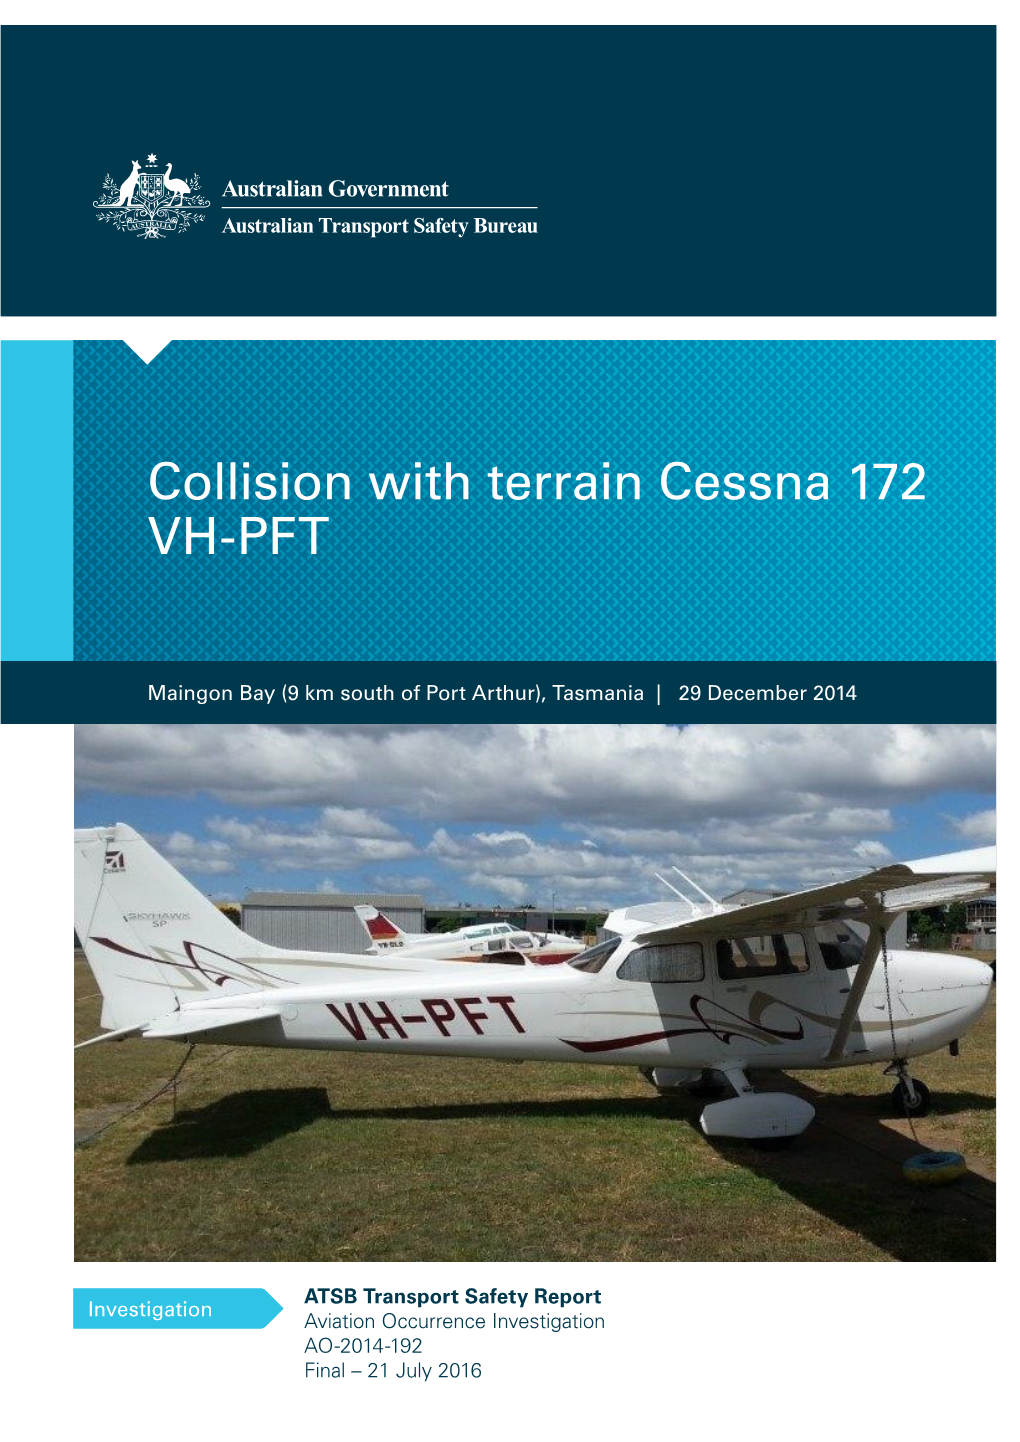 Collision with Terrain Cessna 172 VH-PFT, Maingon Bay (9 Km South of Port Arthur), Tasmania, 29 December 2014